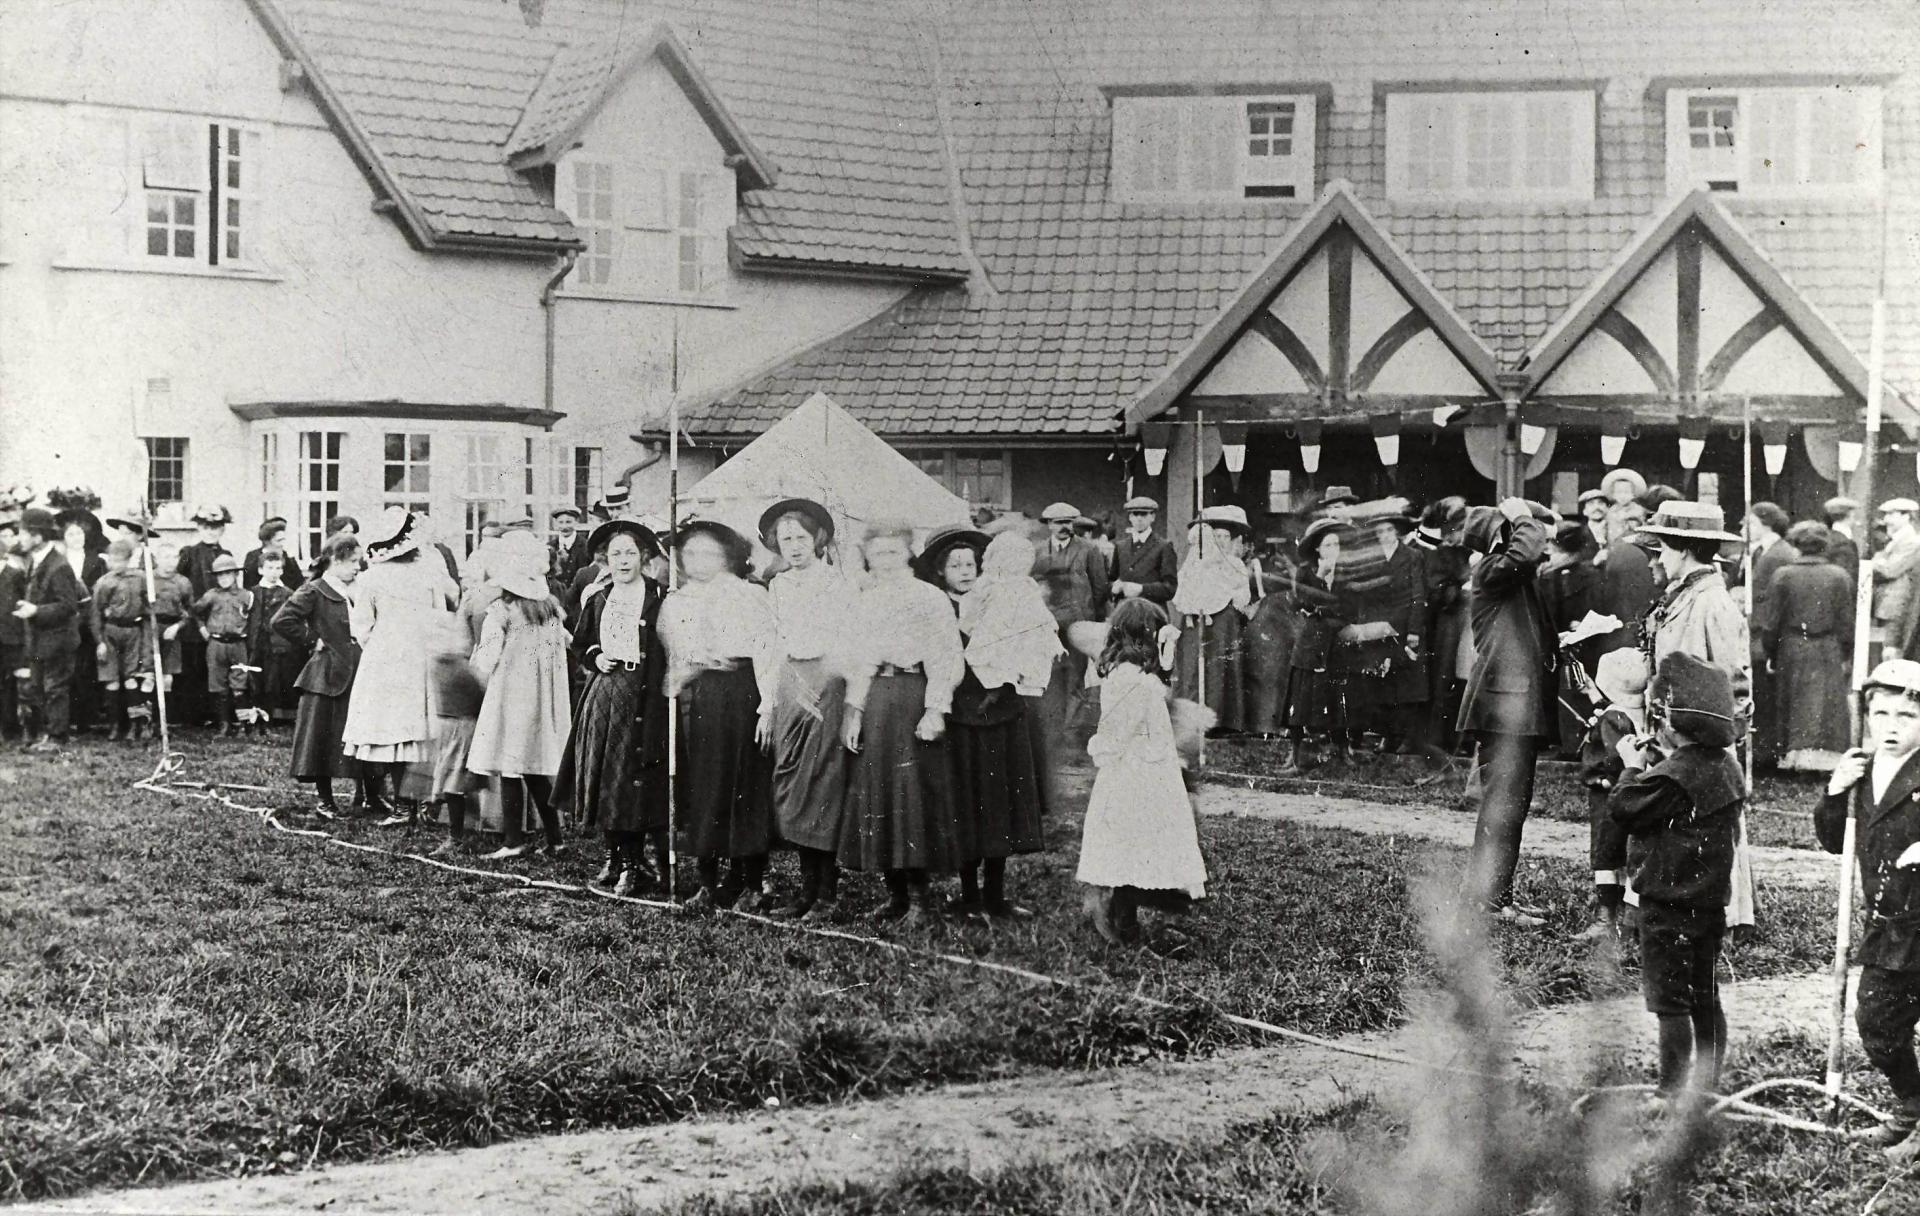 Workers in New Earswick, 1907/8